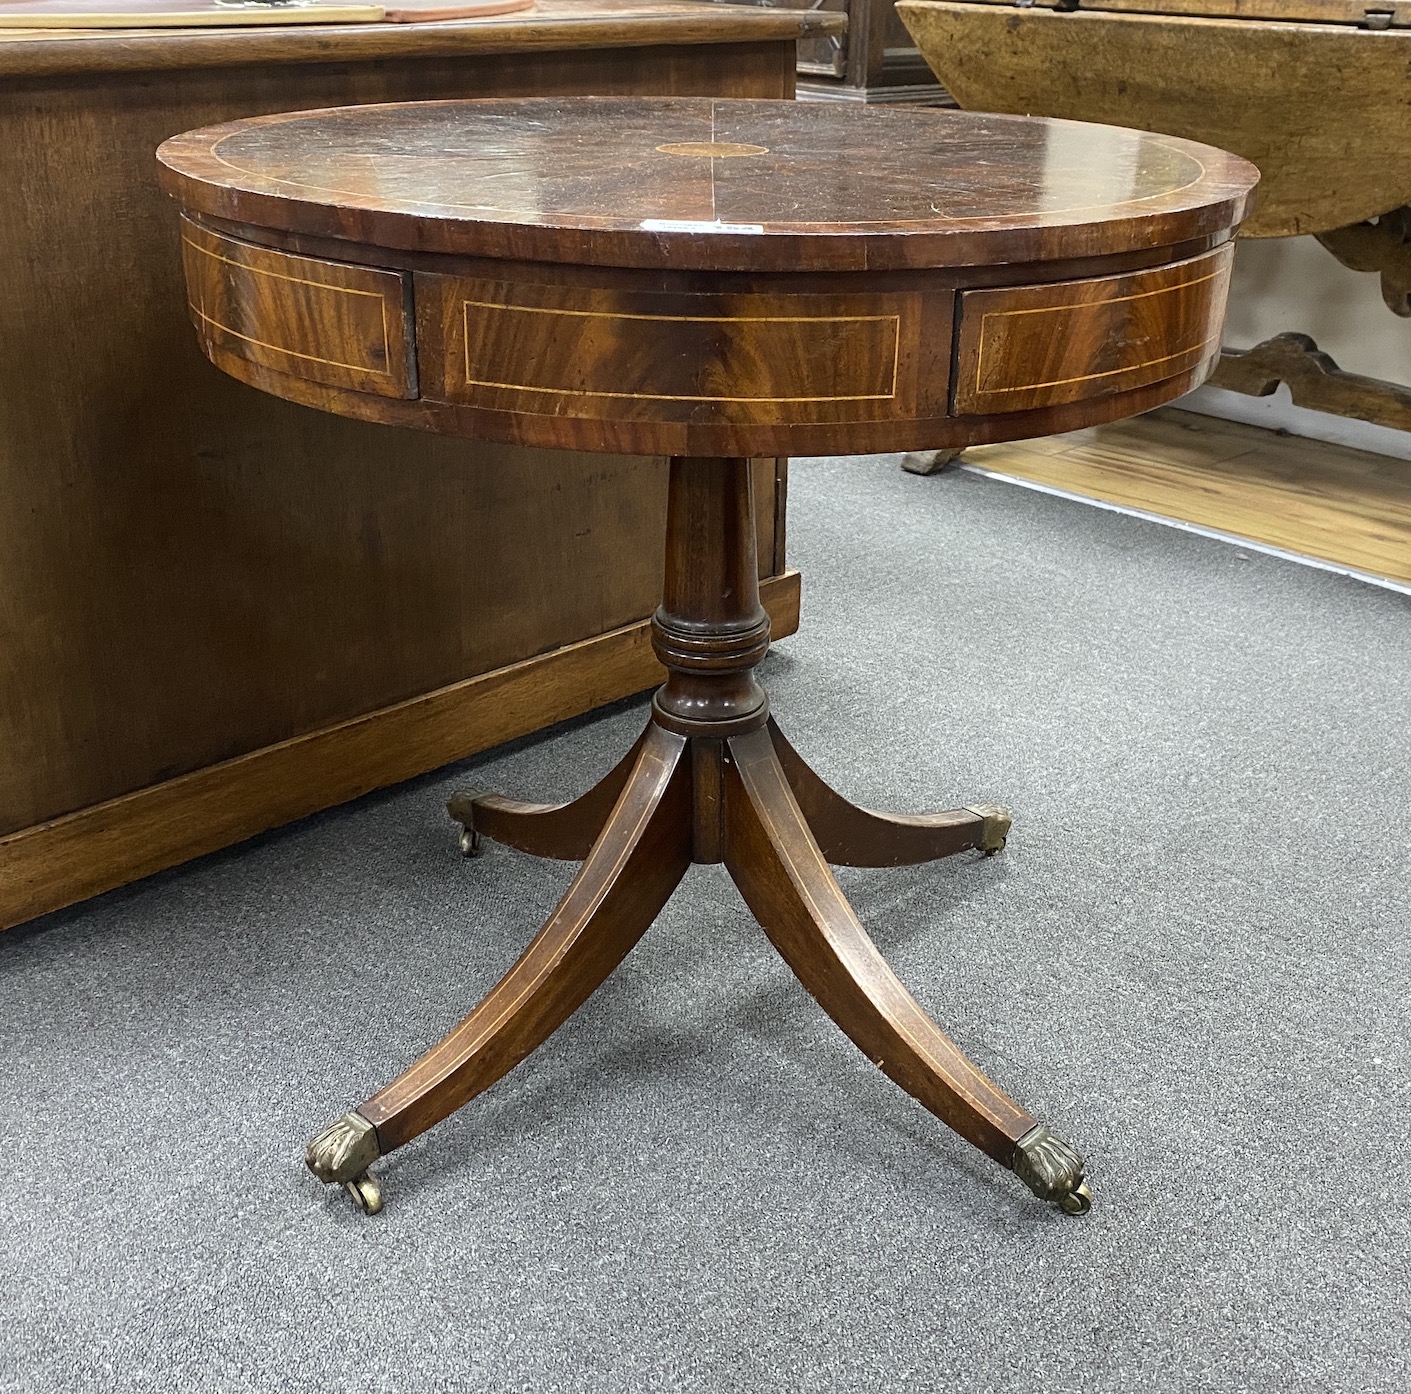 A George III style circular mahogany drum table with segmented veneered top, diameter 76cm, height 73cm                                                                                                                     